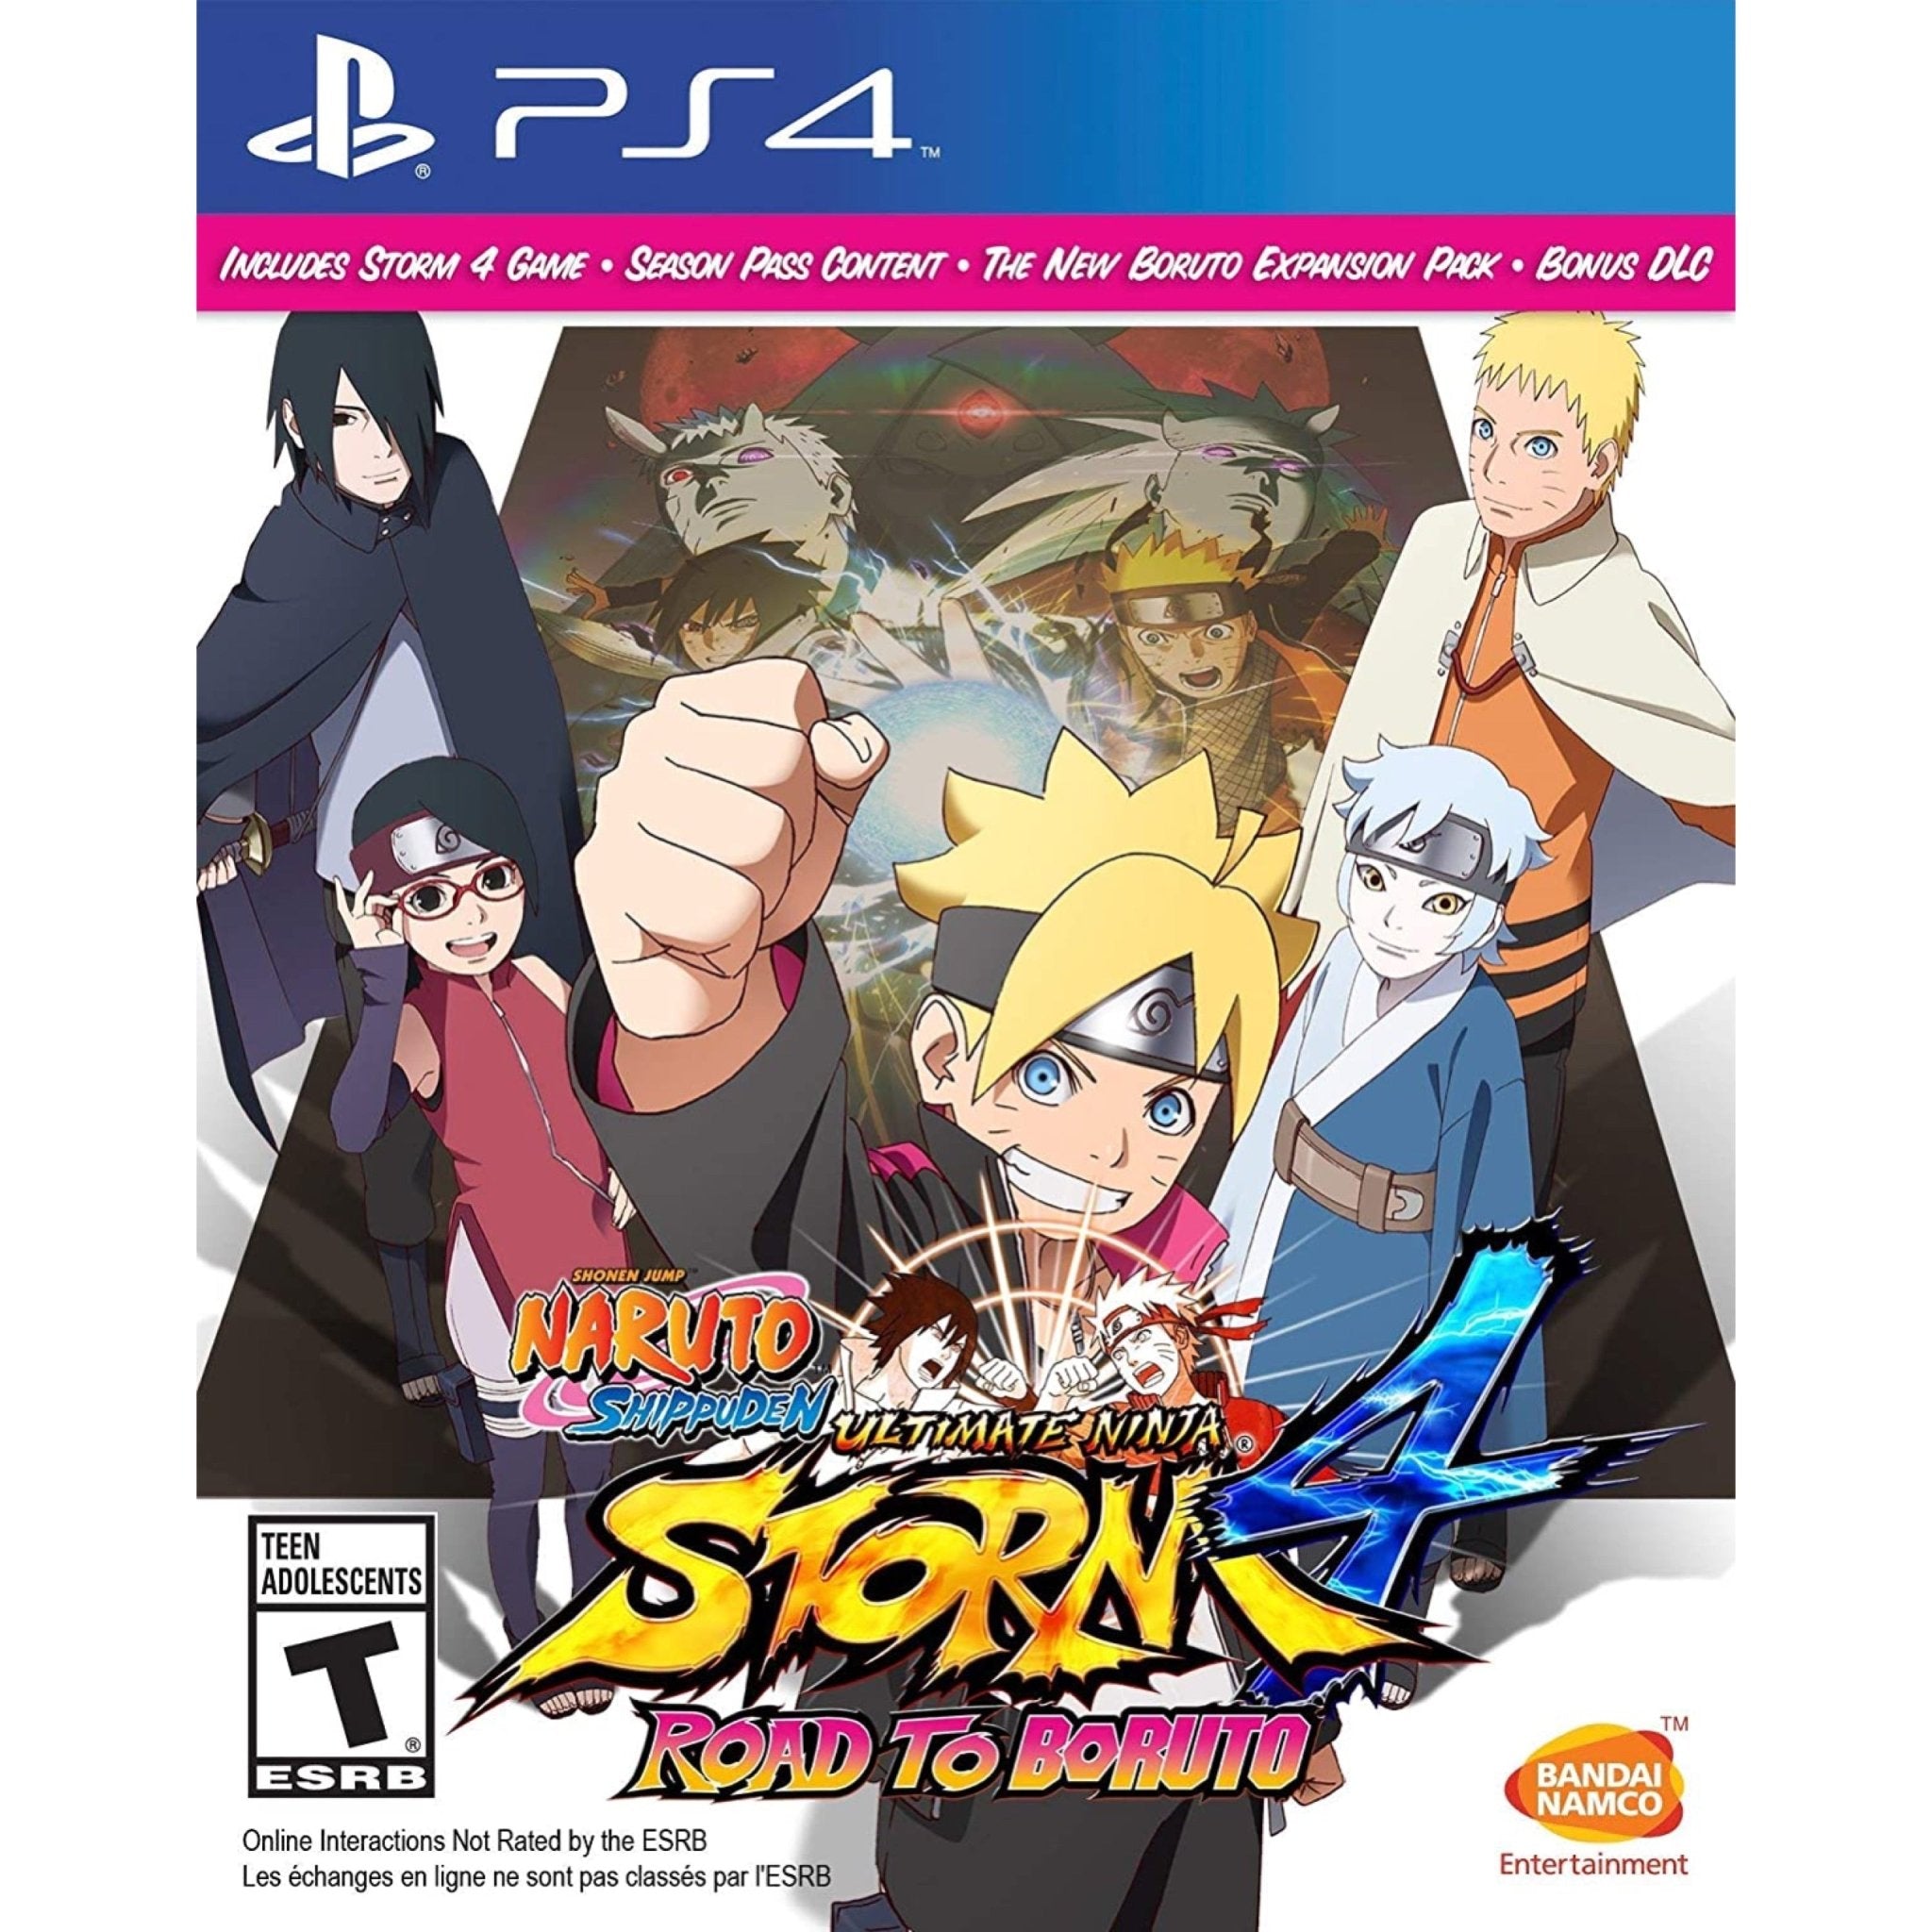 Naruto Shippuden Ultimate Ninja Storm 4 Road To Boruto for PlayStation “Region 1” - Level UpLevel UpPlaystation Video Games